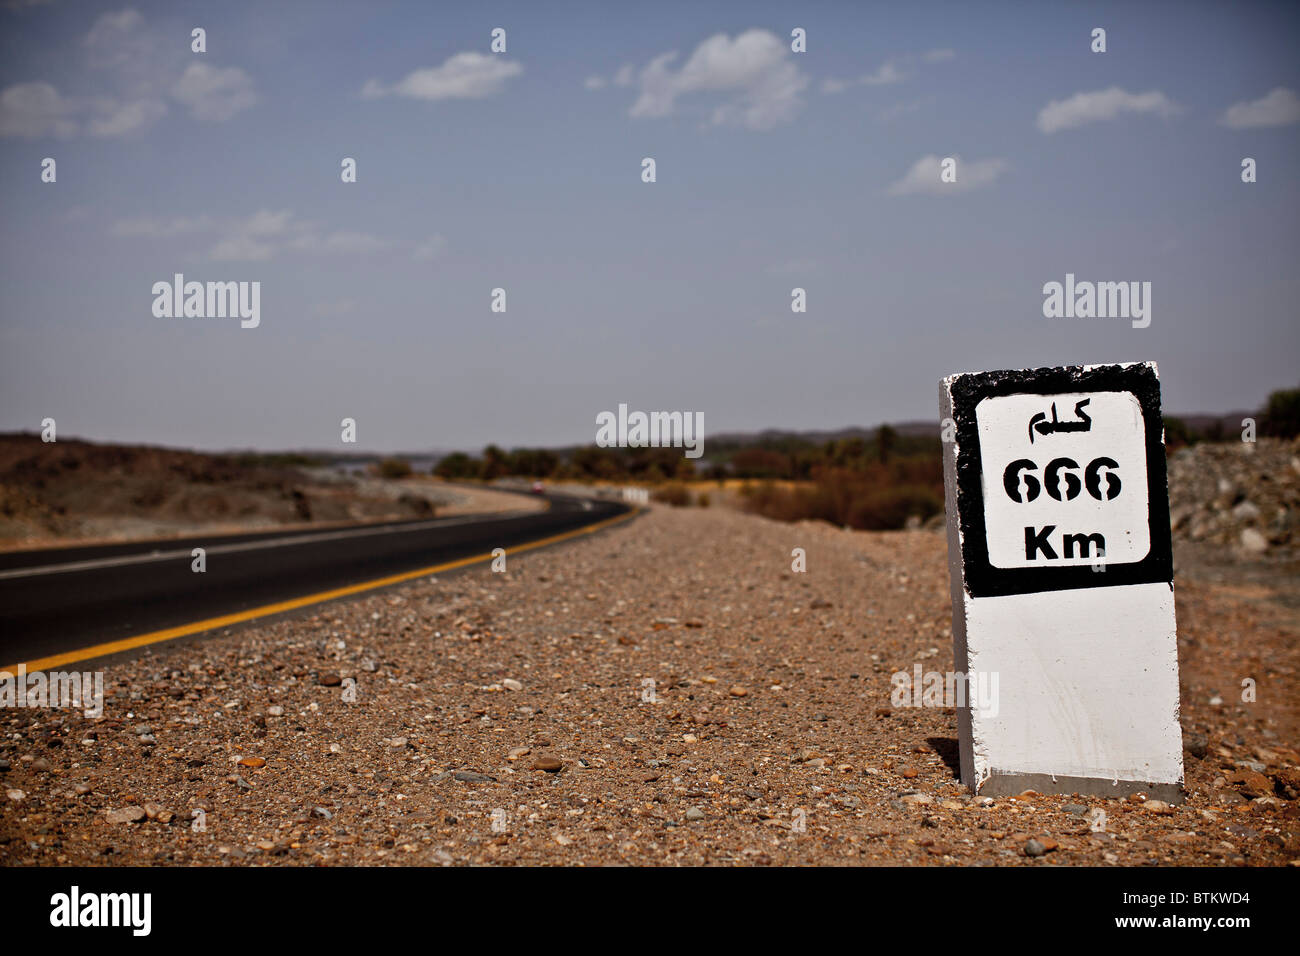 Road sign in Sudan Stock Photo